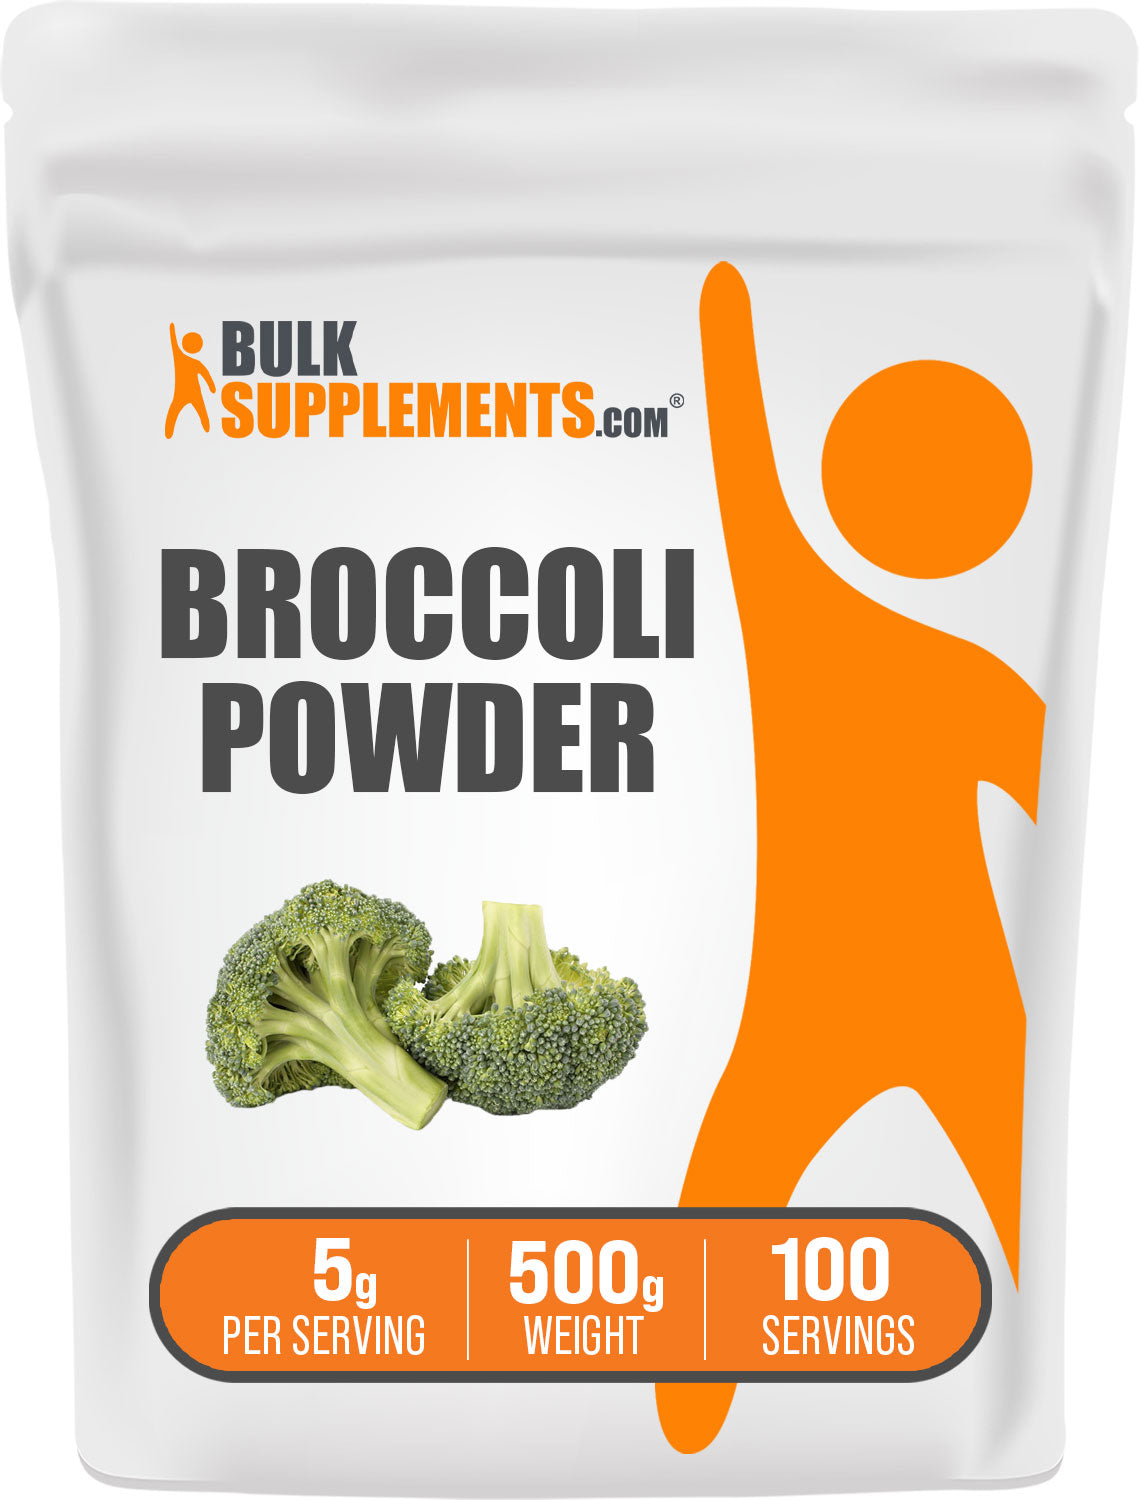 500g of broccoli powder